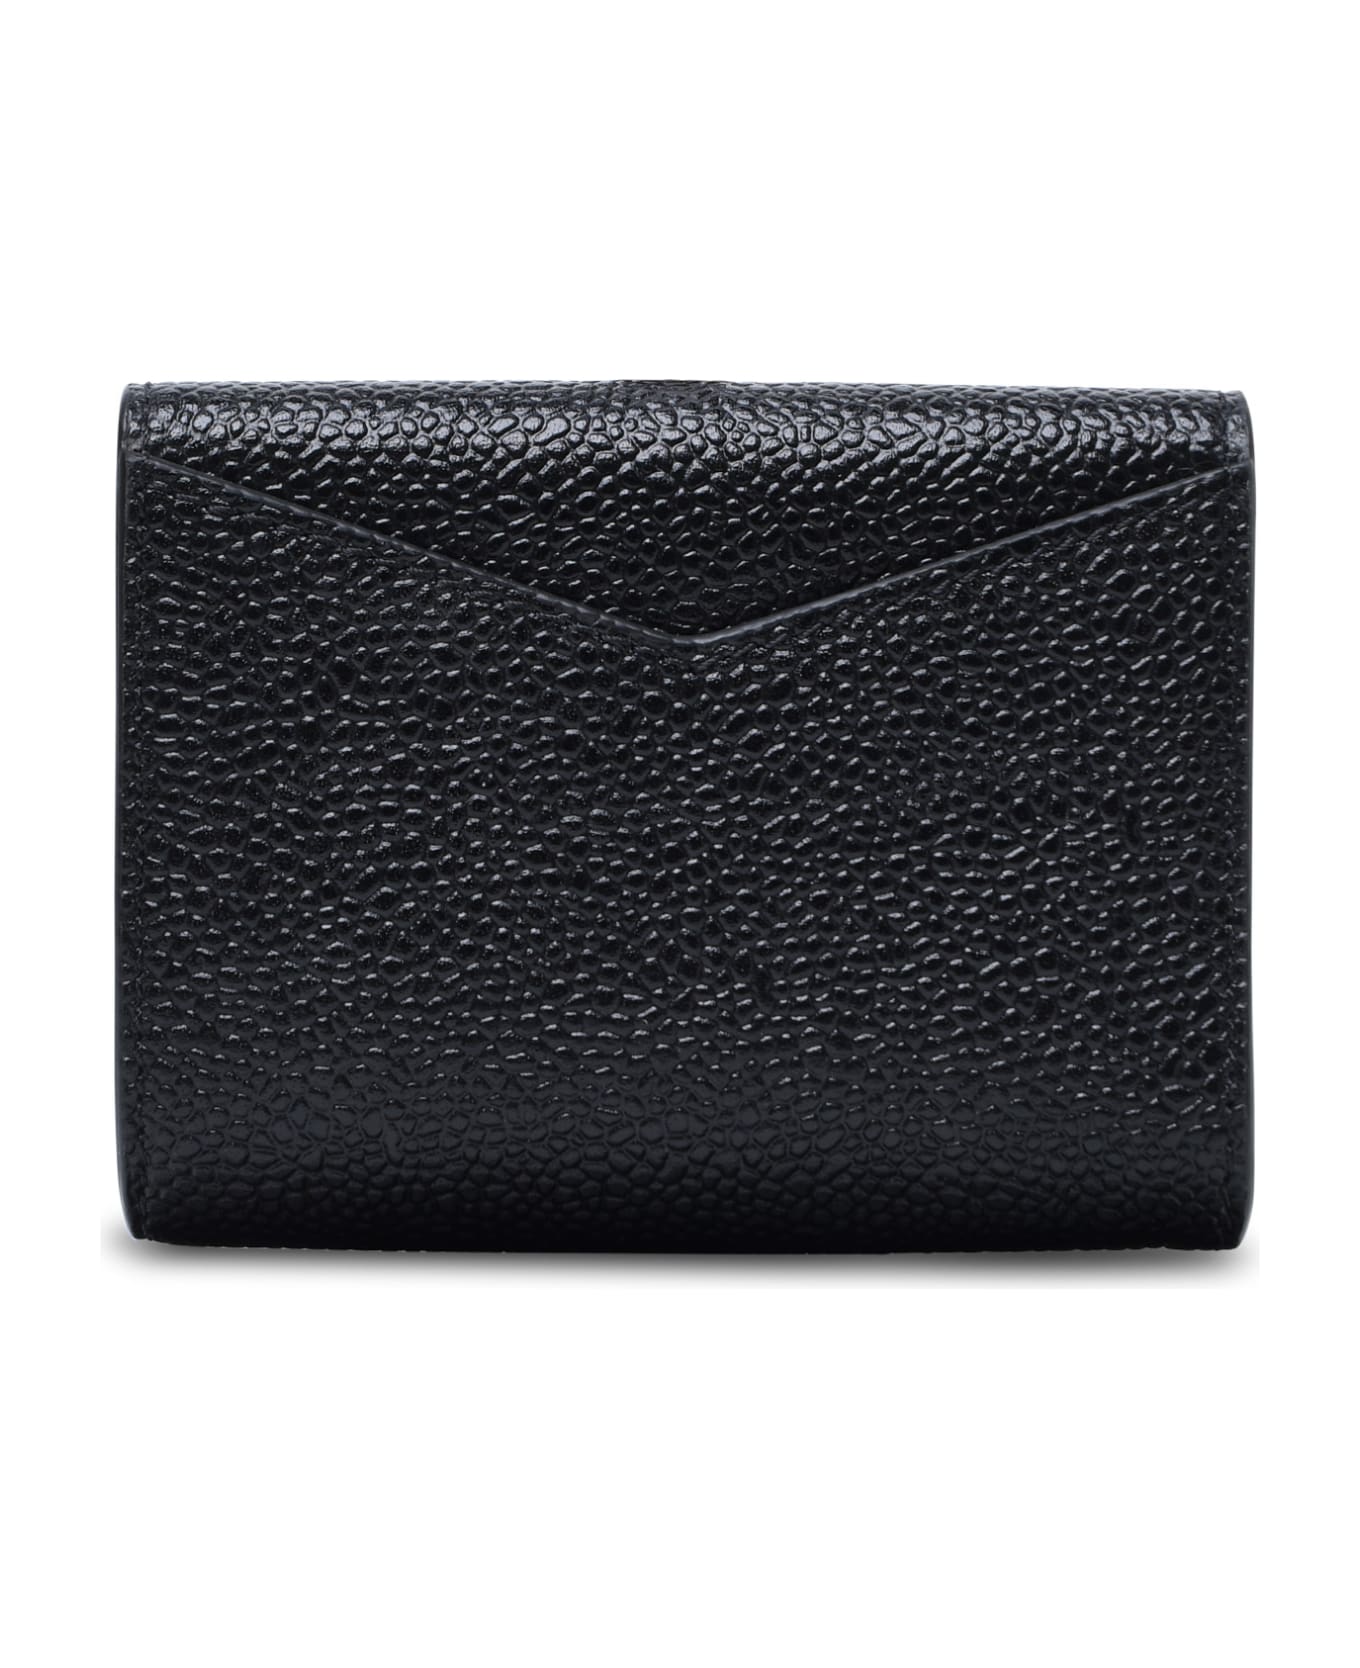 Thom Browne Black Grained Leather Purse - BLACK 財布